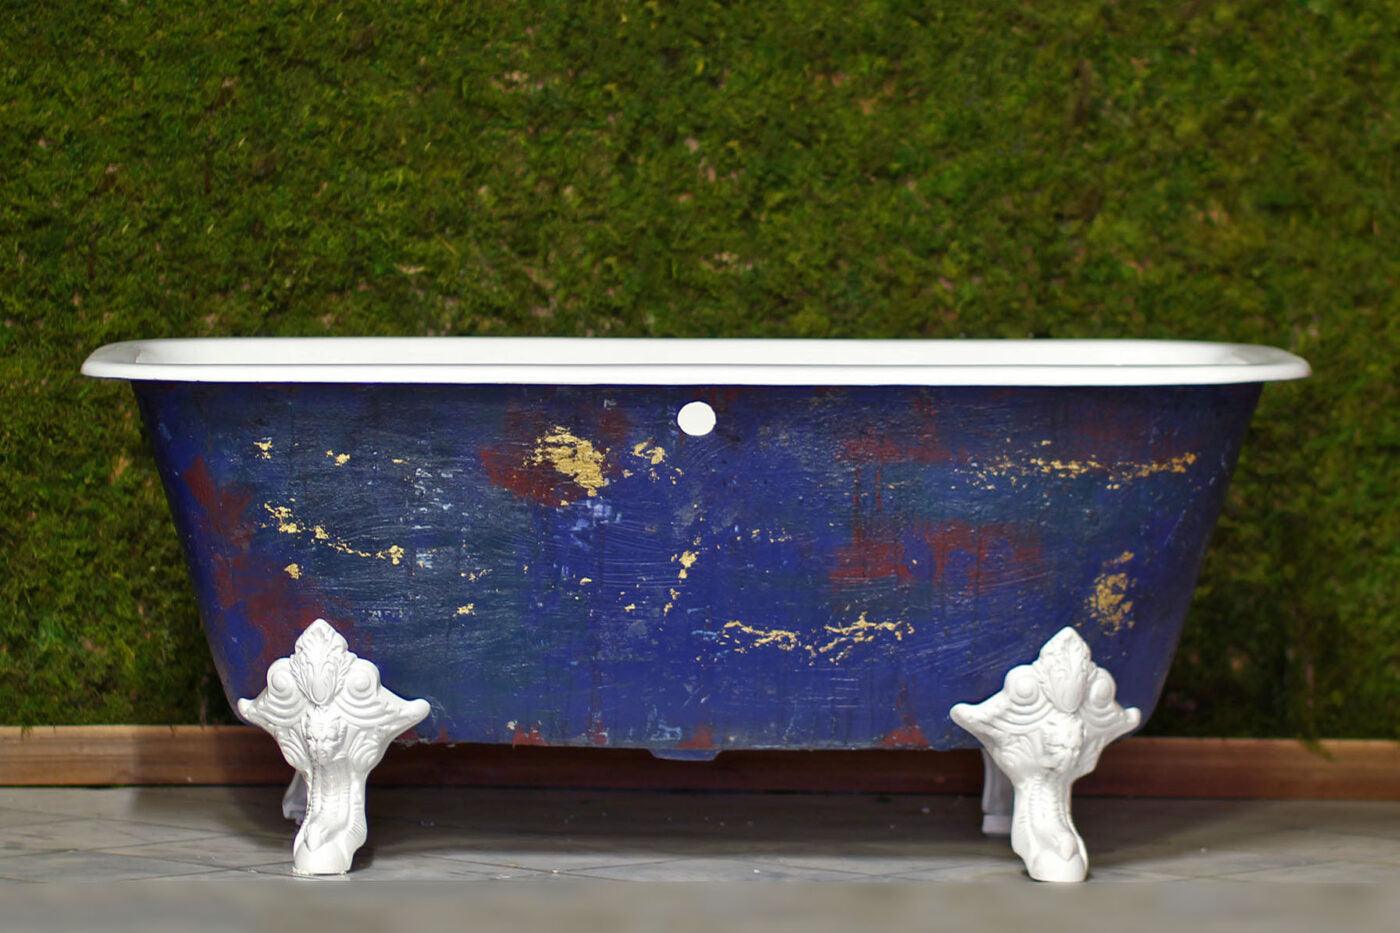 WatermarkFixtures Square Cast Iron Clawfoot Bathtub Trompe L’oeil Antiqued Lagniappe Freestanding Claw Tub - Degas Blue - Bathroom Design Center